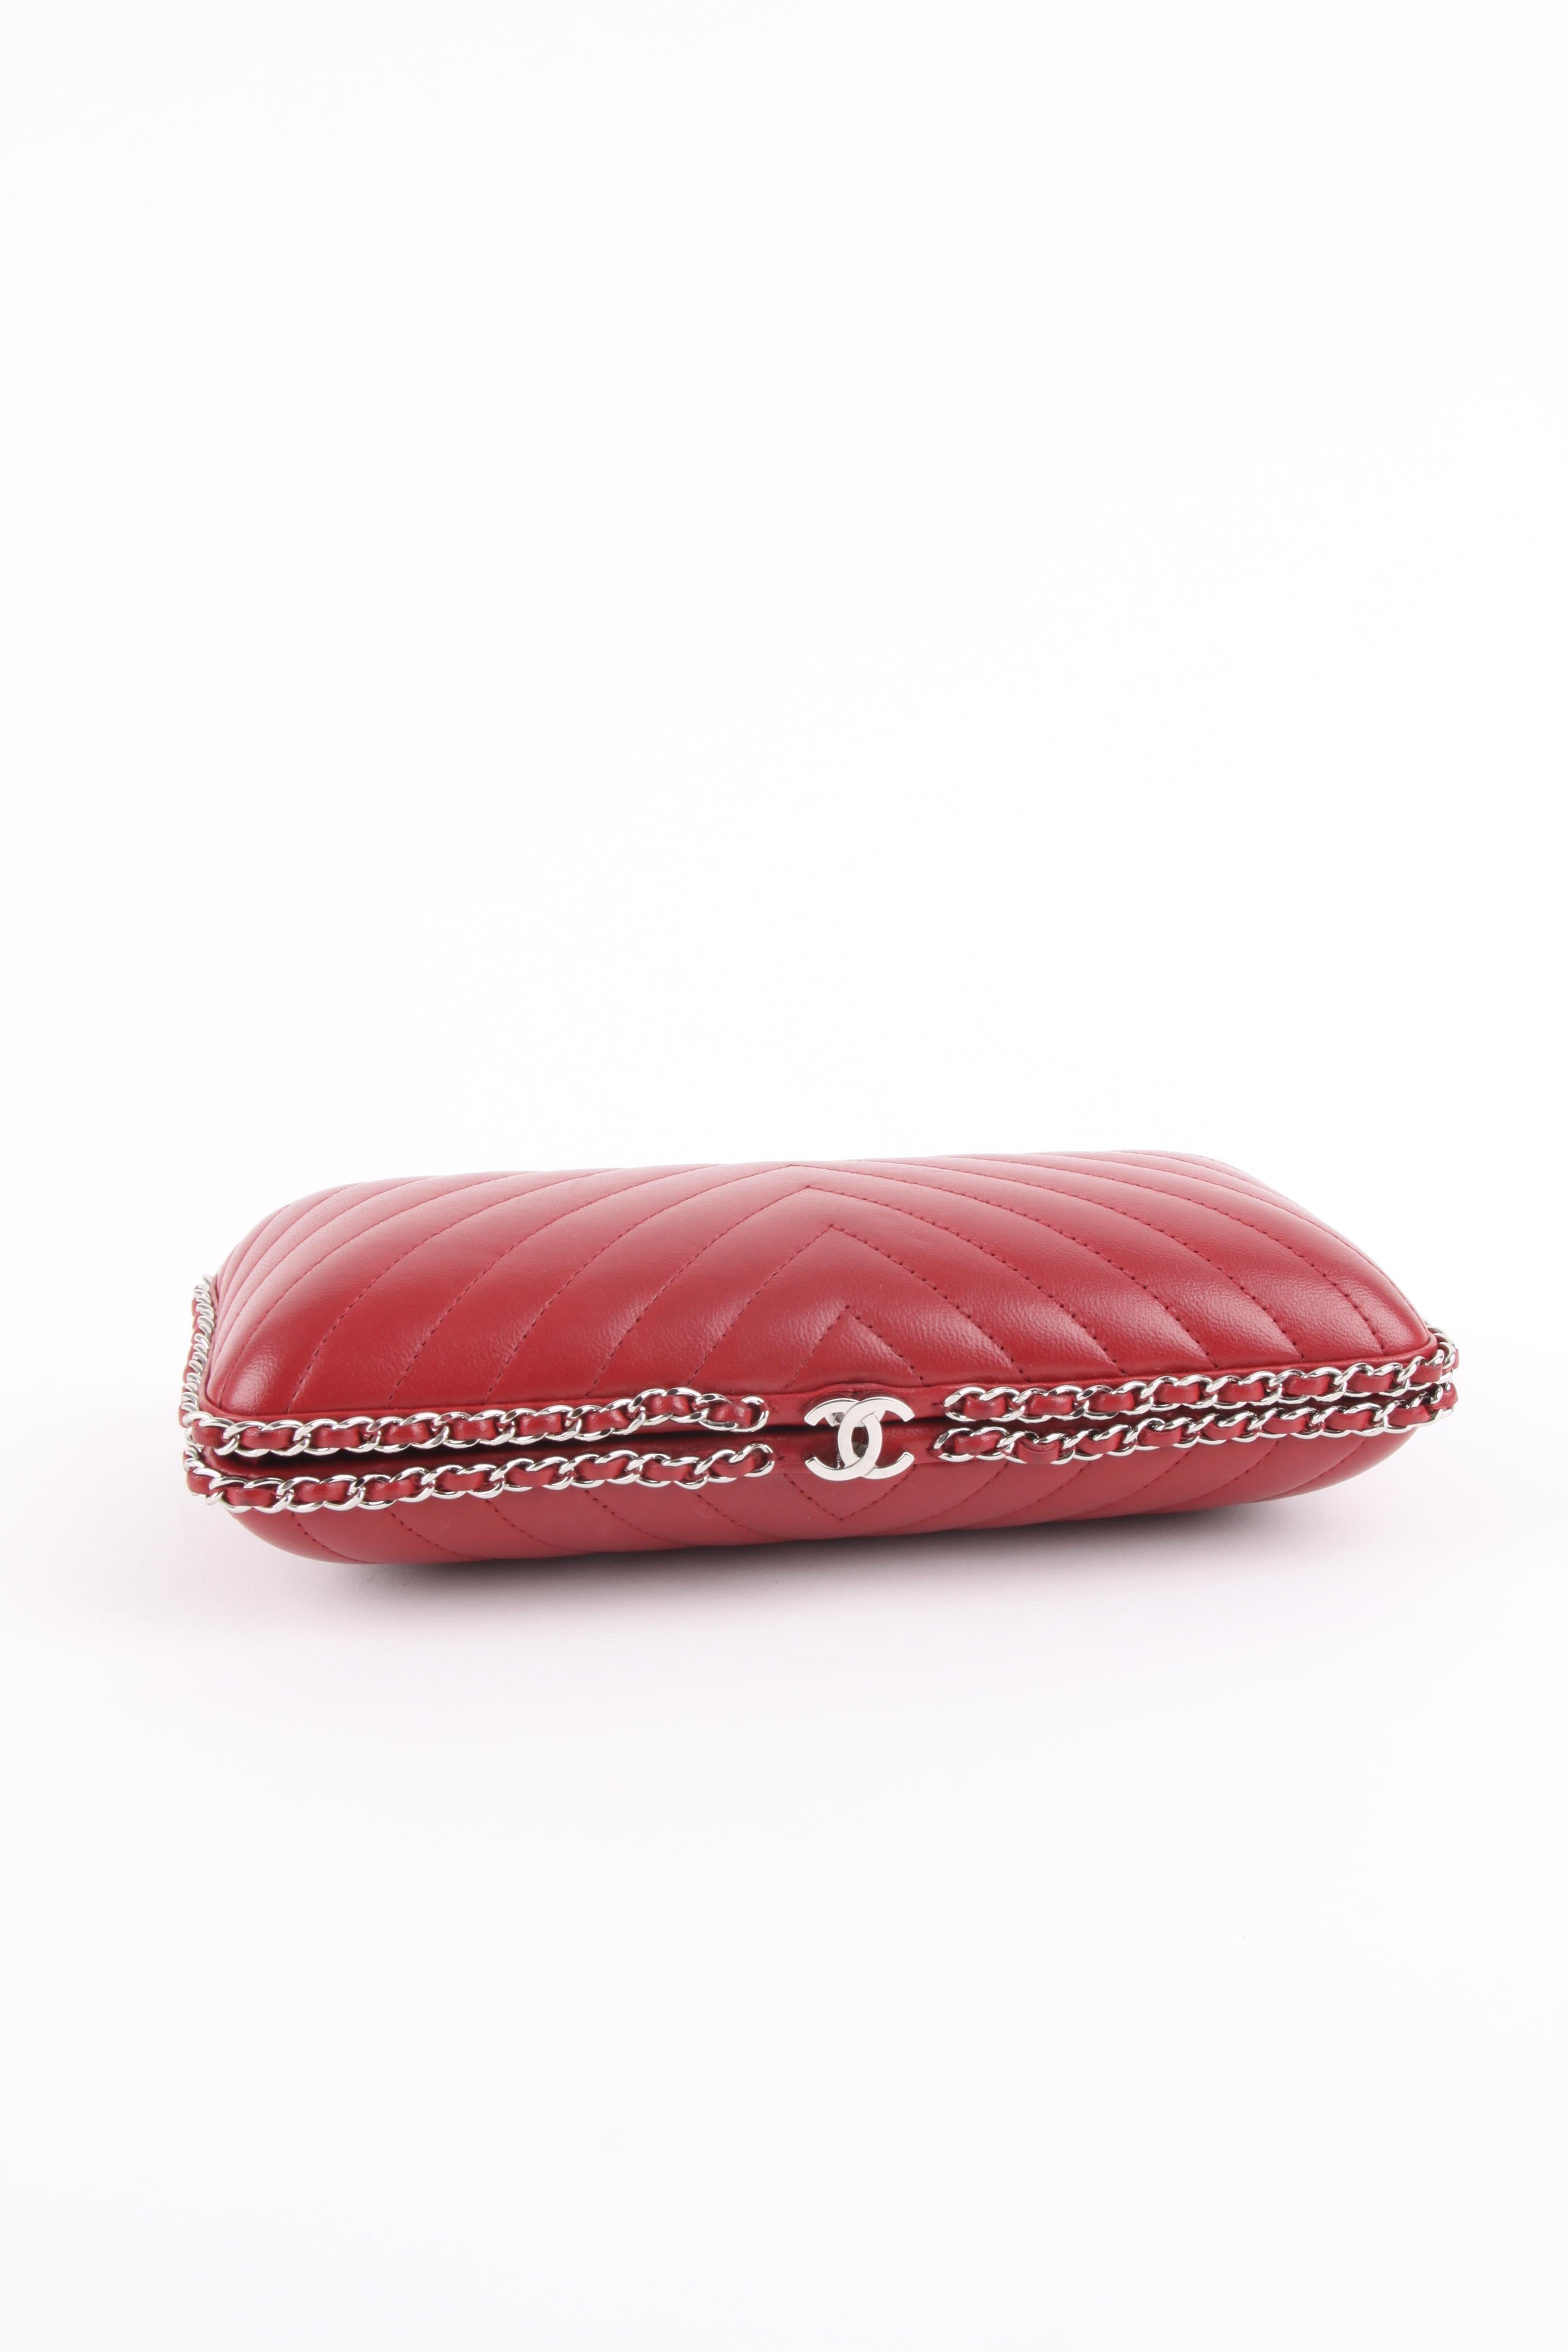 Chanel Chain Around Box Clutch Chevron - red For Sale 2